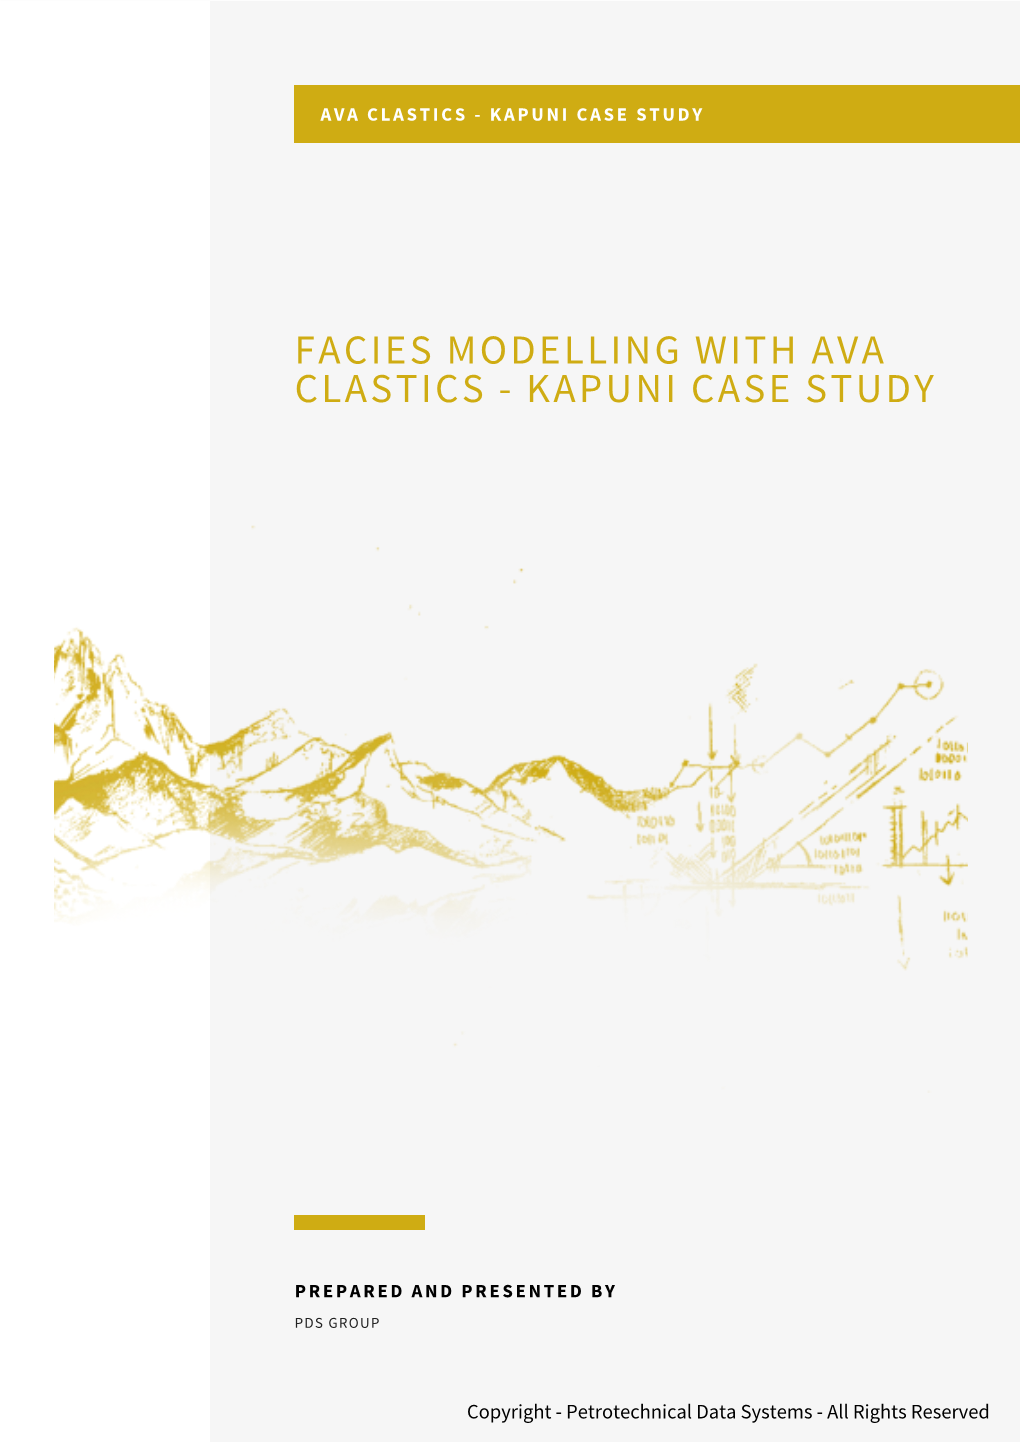 Facies Modelling with Ava Clastics - Kapuni Case Study